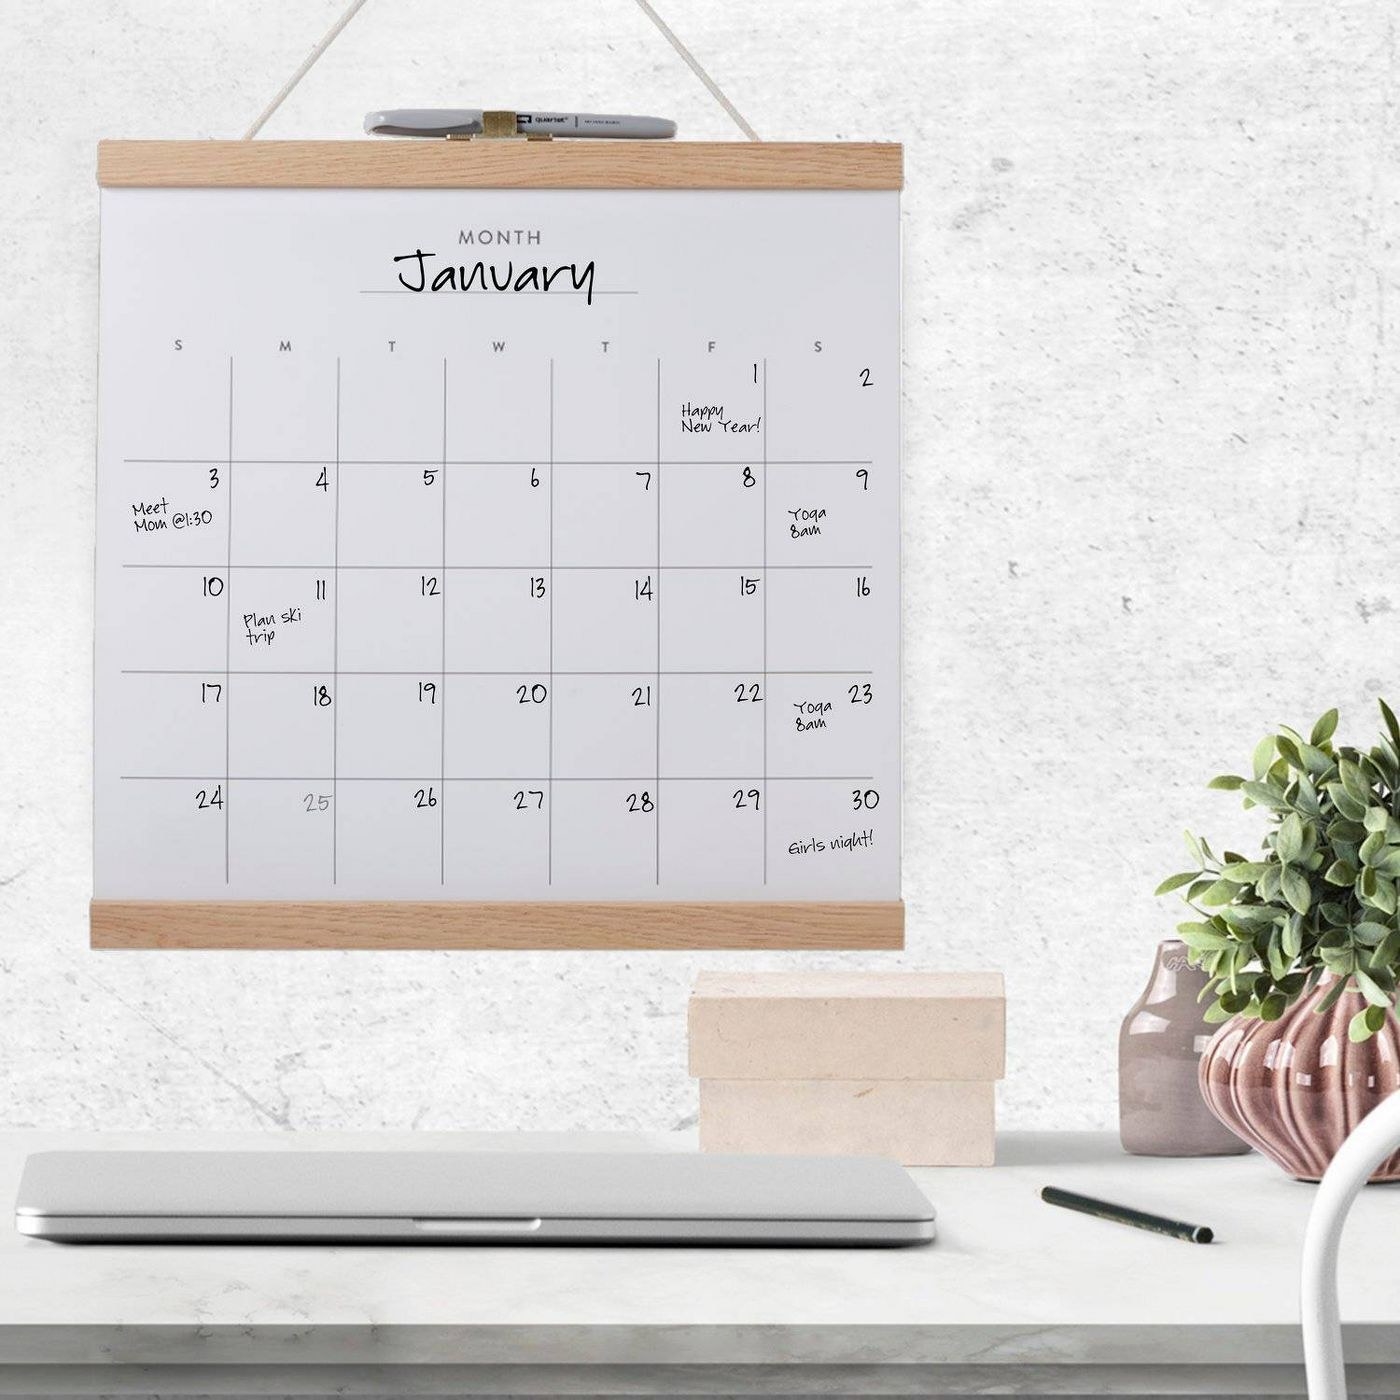 The dry erase monthly calendar